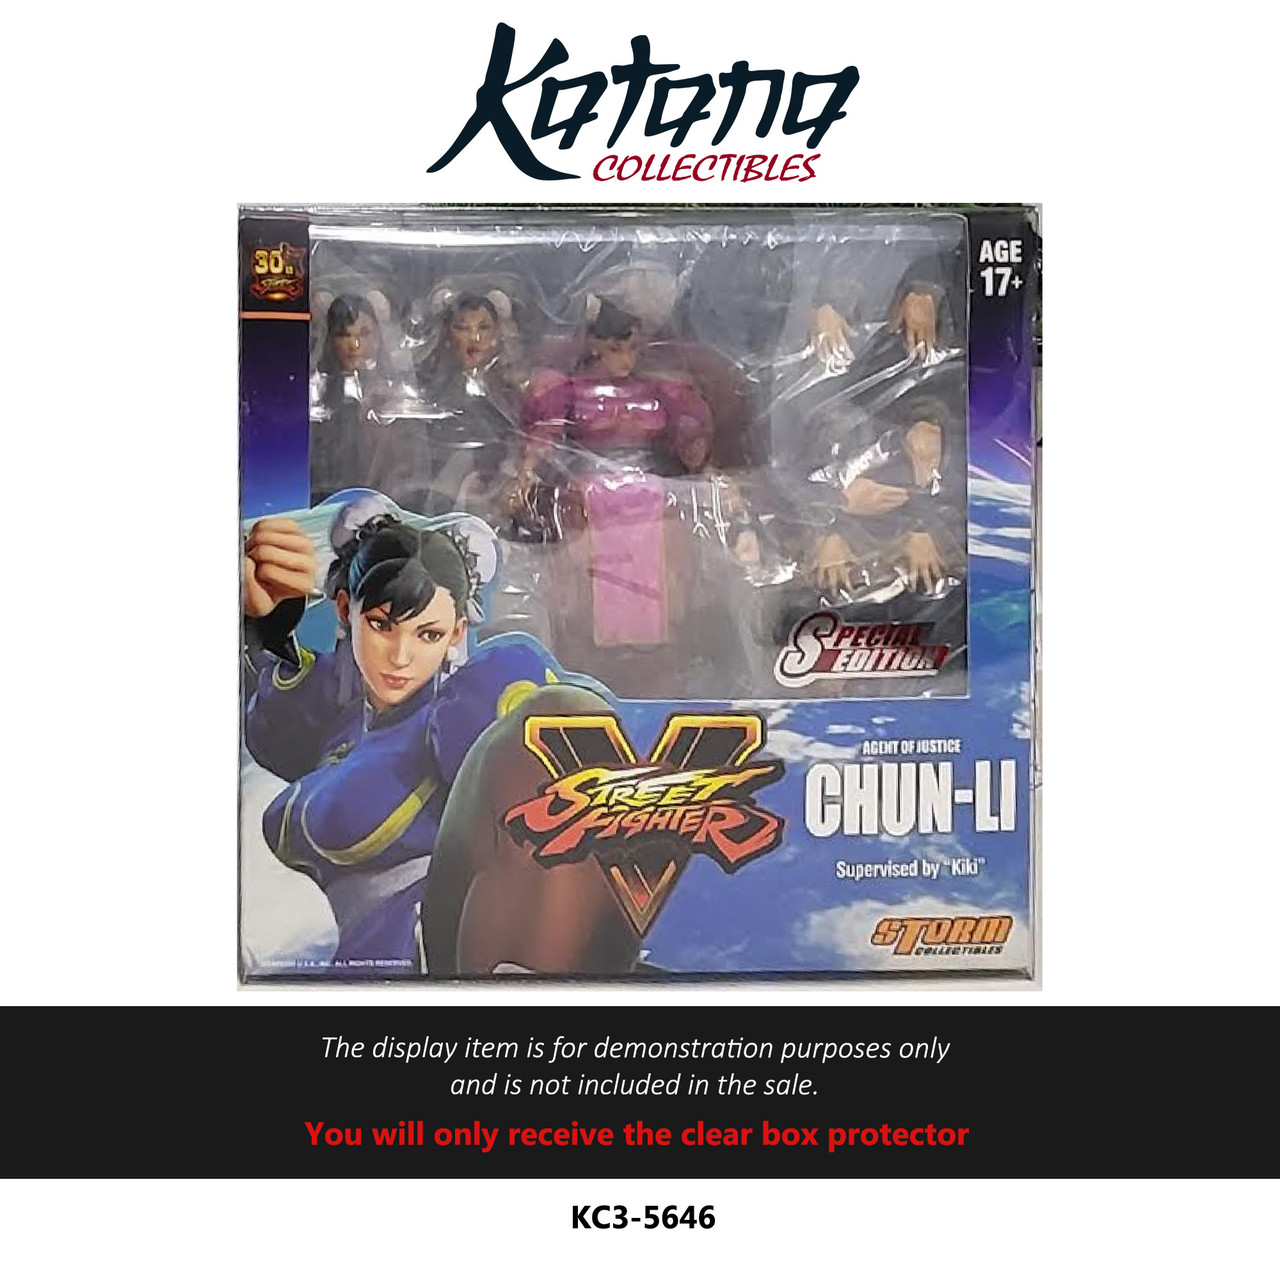 Katana Collectibles Protector For Street Fighter Chun Li Special Edition